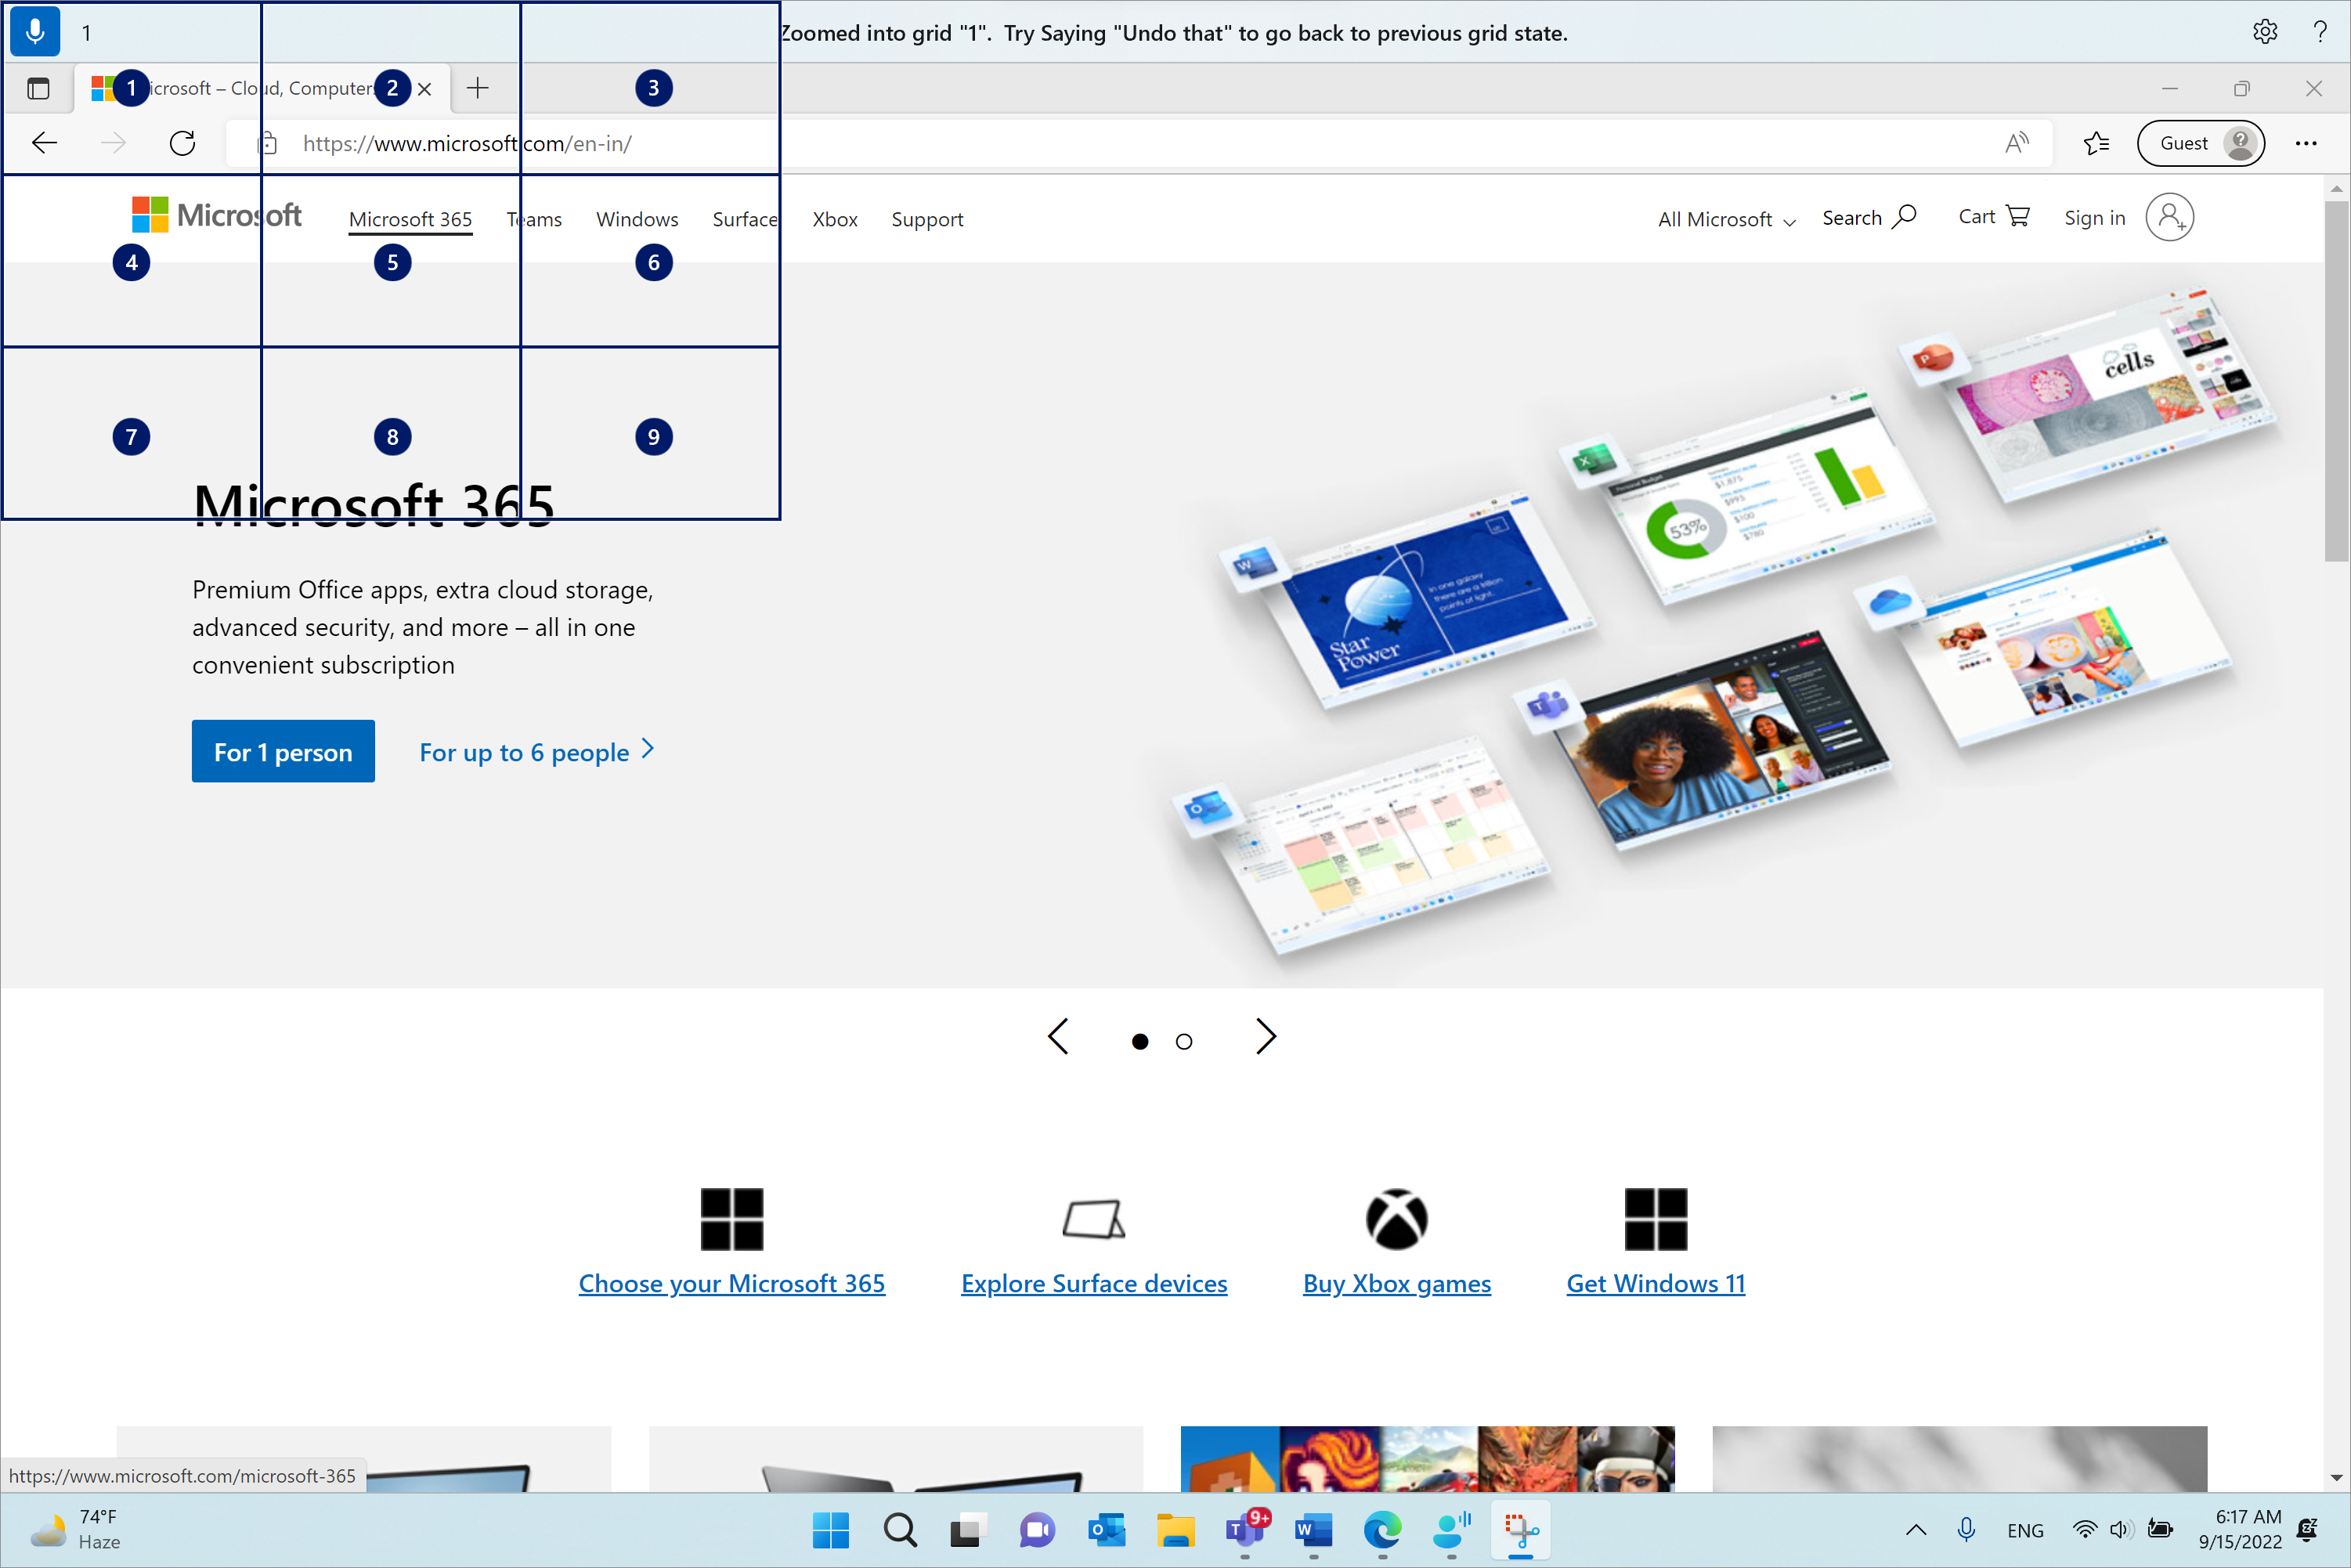 Microsoft Edge가 열려 있고 Microsoft.com 페이지에 있습니다. 음성 액세스 표시줄이 위쪽에 있고 수신 대기 상태입니다. 실행된 명령은 "1"이고 표시되는 피드백은 "그리드 "1로 확대"입니다. 이전 그리드 상태로 돌아가려면 "실행 취소"라고 말하십시오.